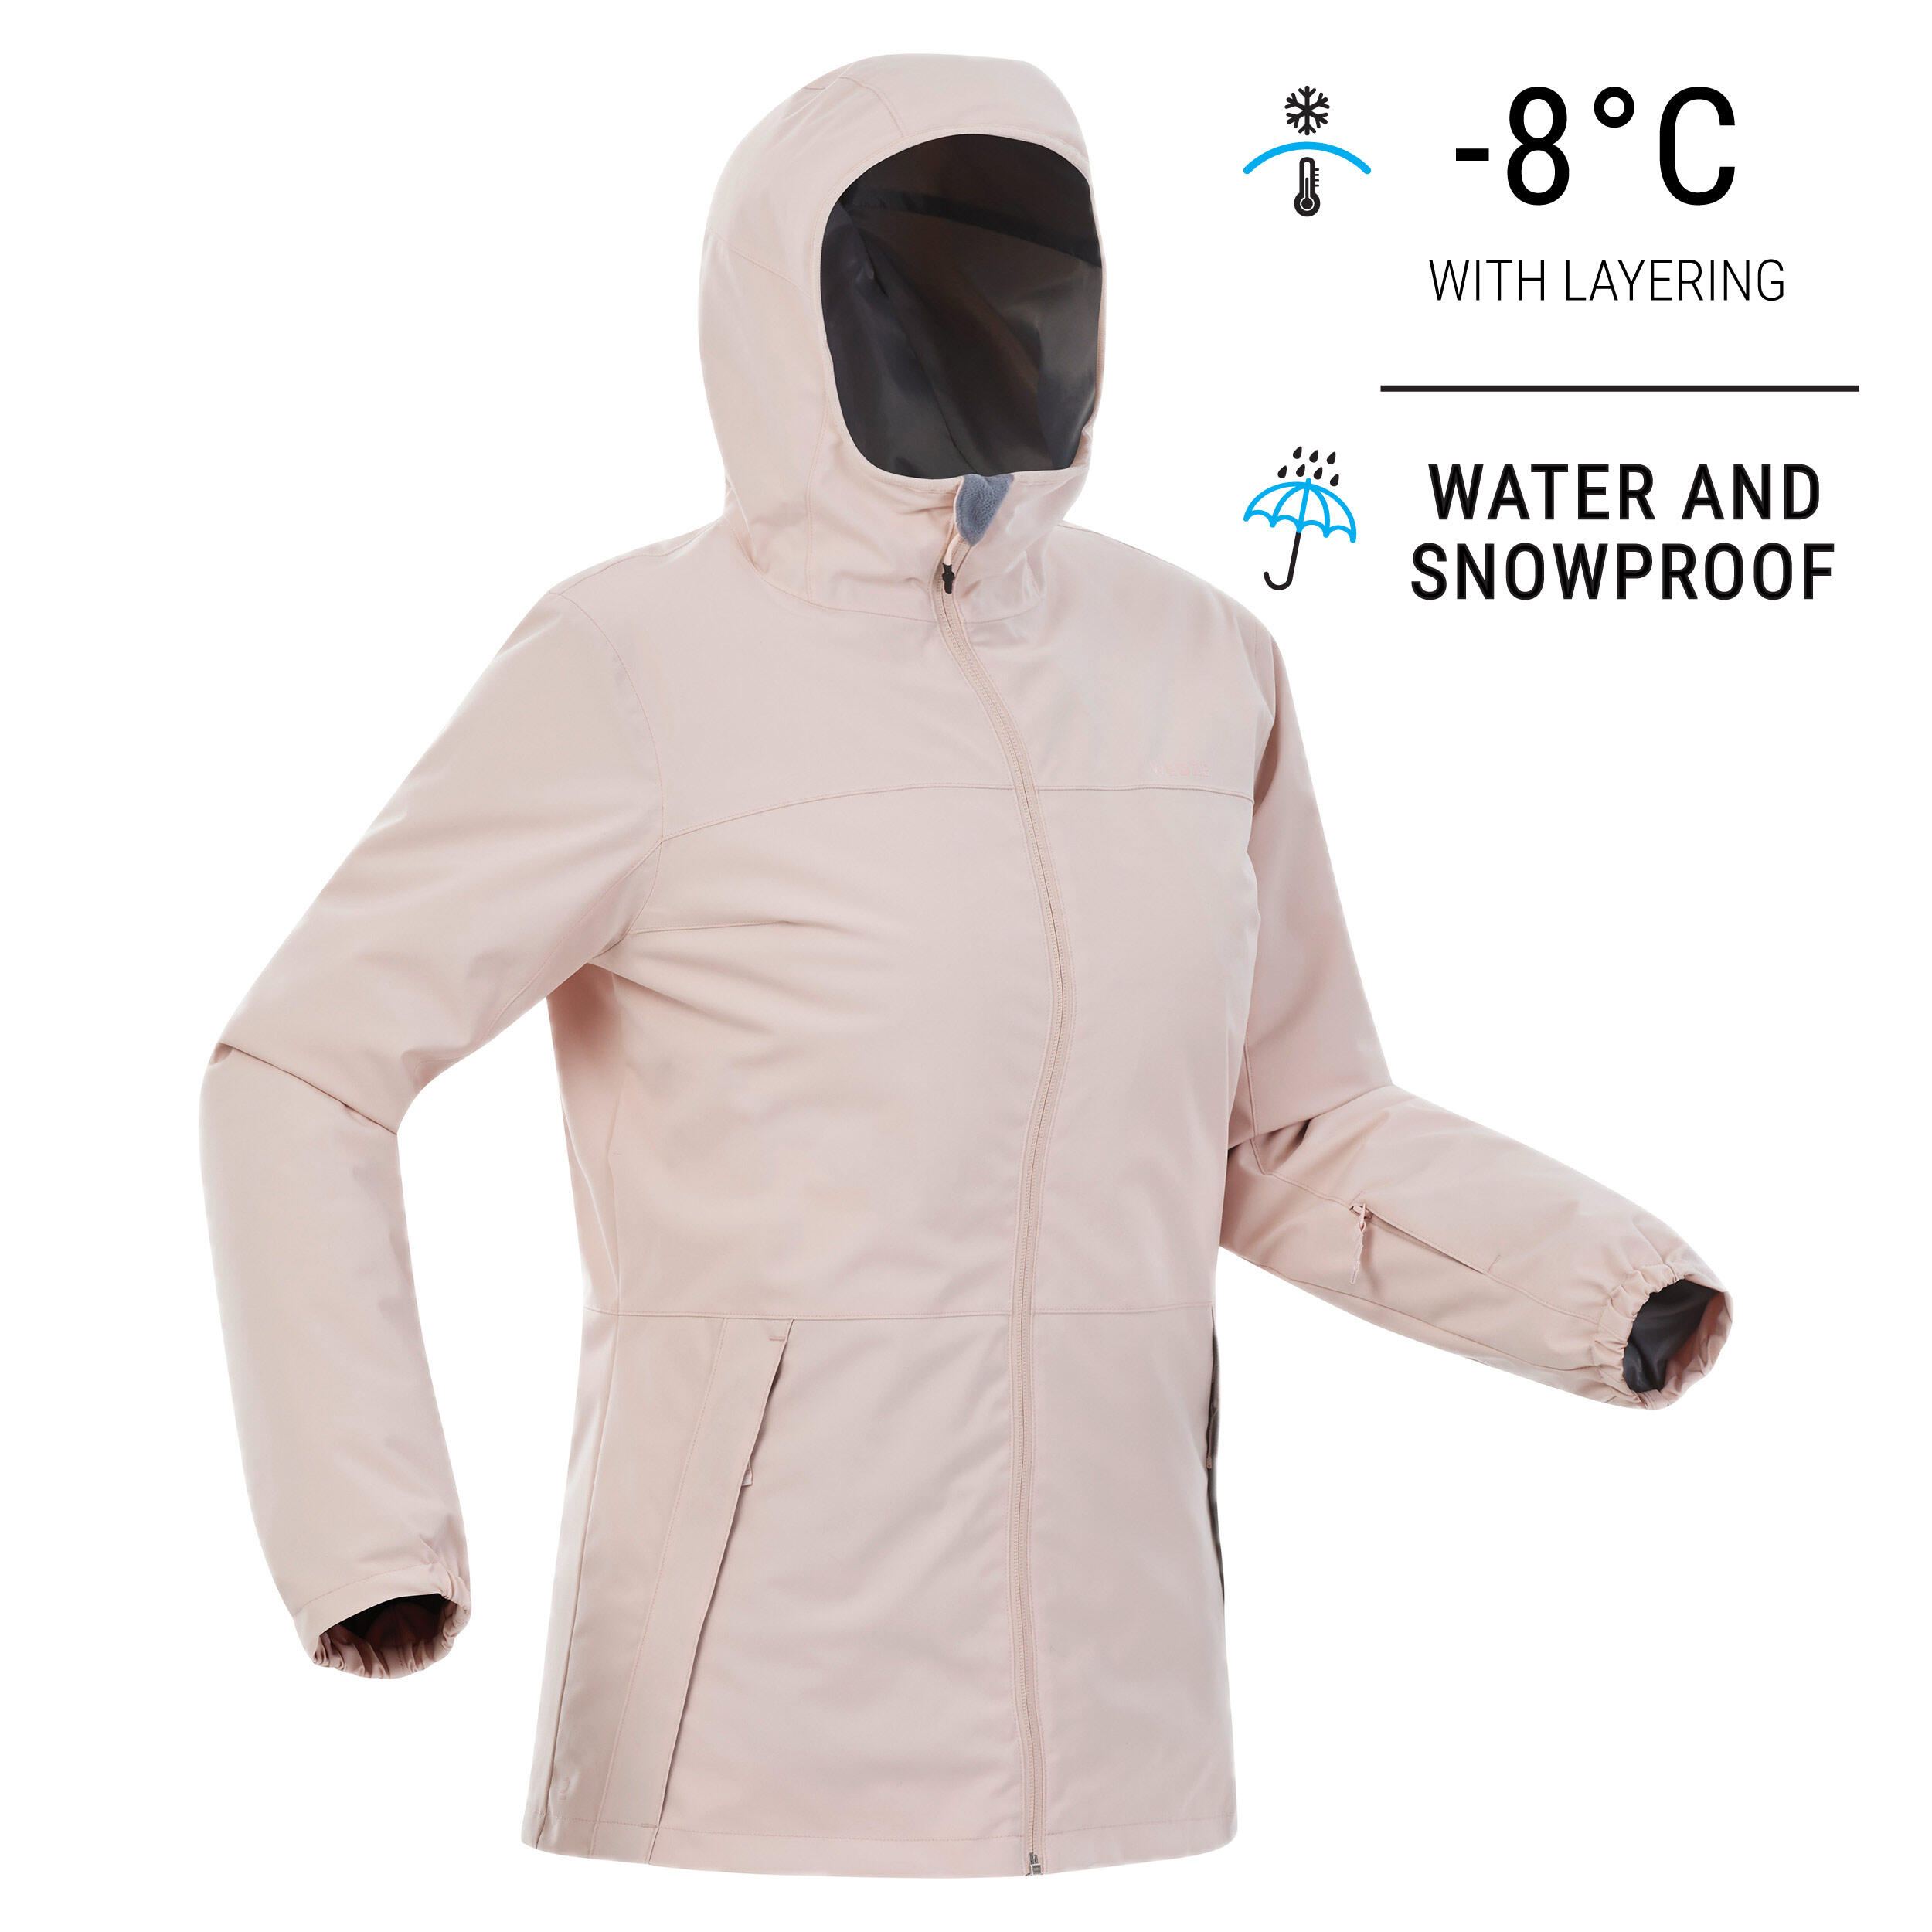 Buy TACVASEN Men's Winter Jacket with Hood Water Repellent Windproof  Thicken Parka Snow Ski Coat, Navy, Small at Amazon.in